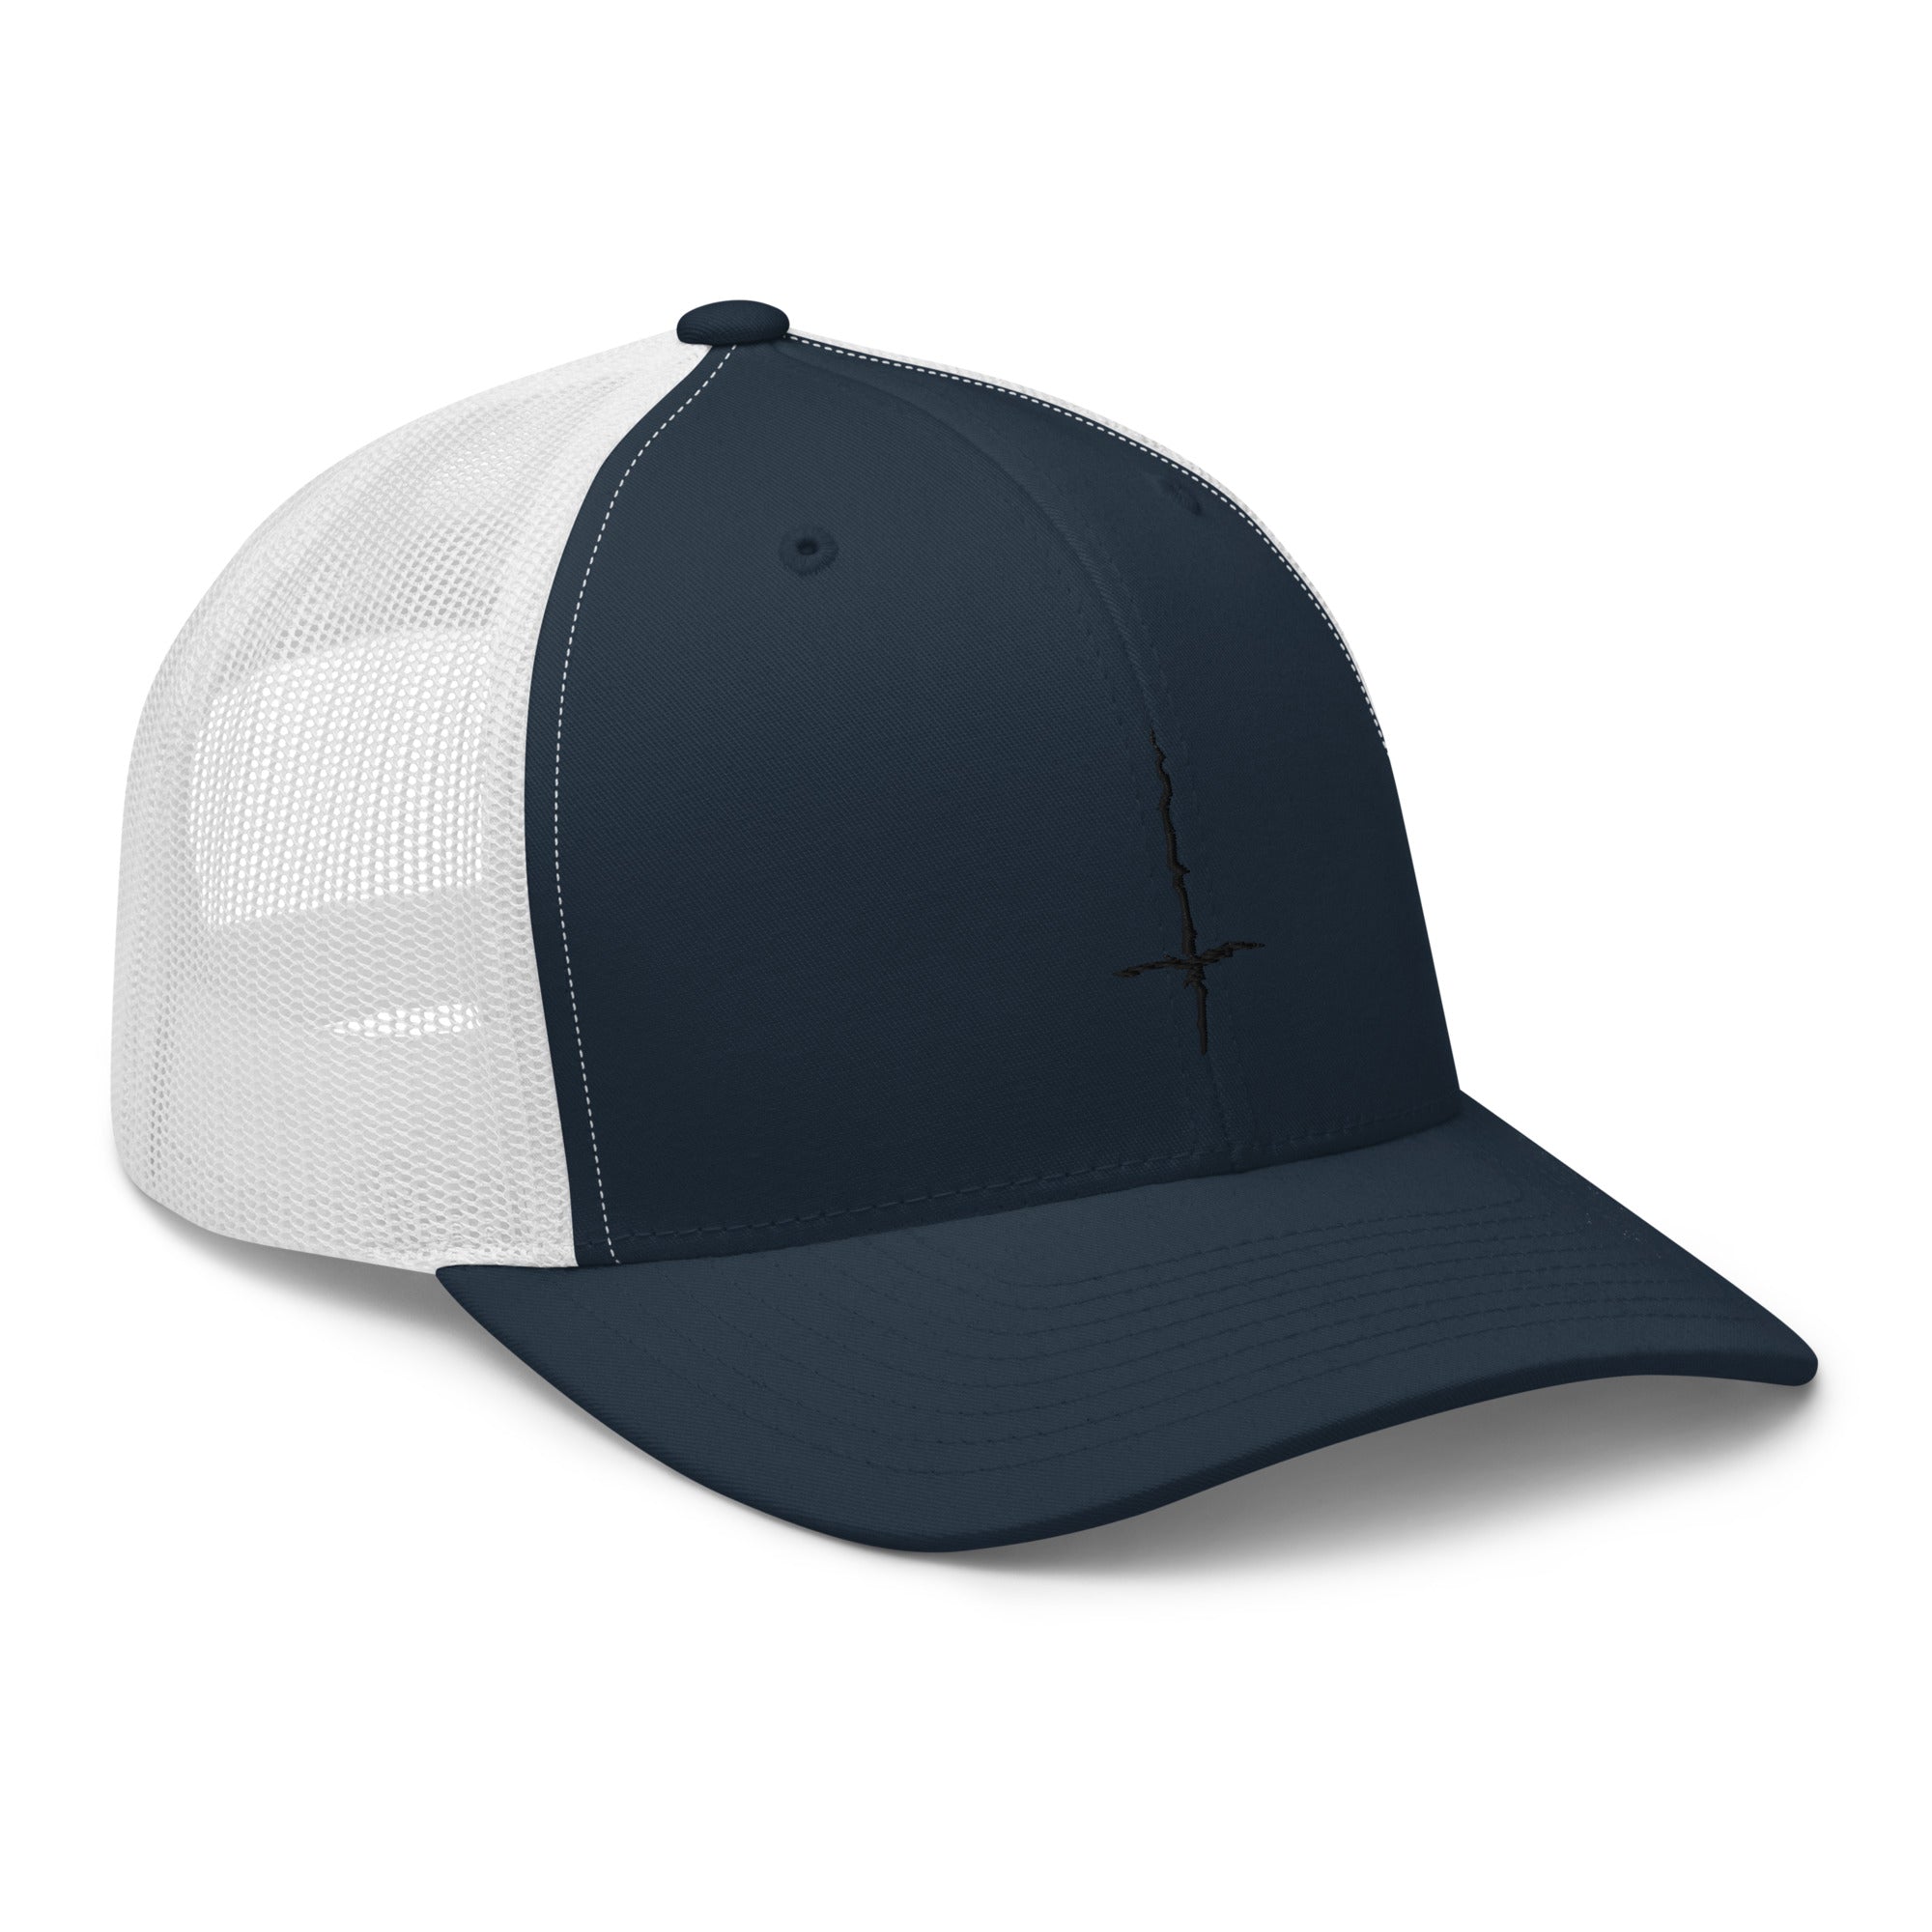 Black Inverted Cross Black Metal Style Embroidered Trucker Cap Snapback Hat